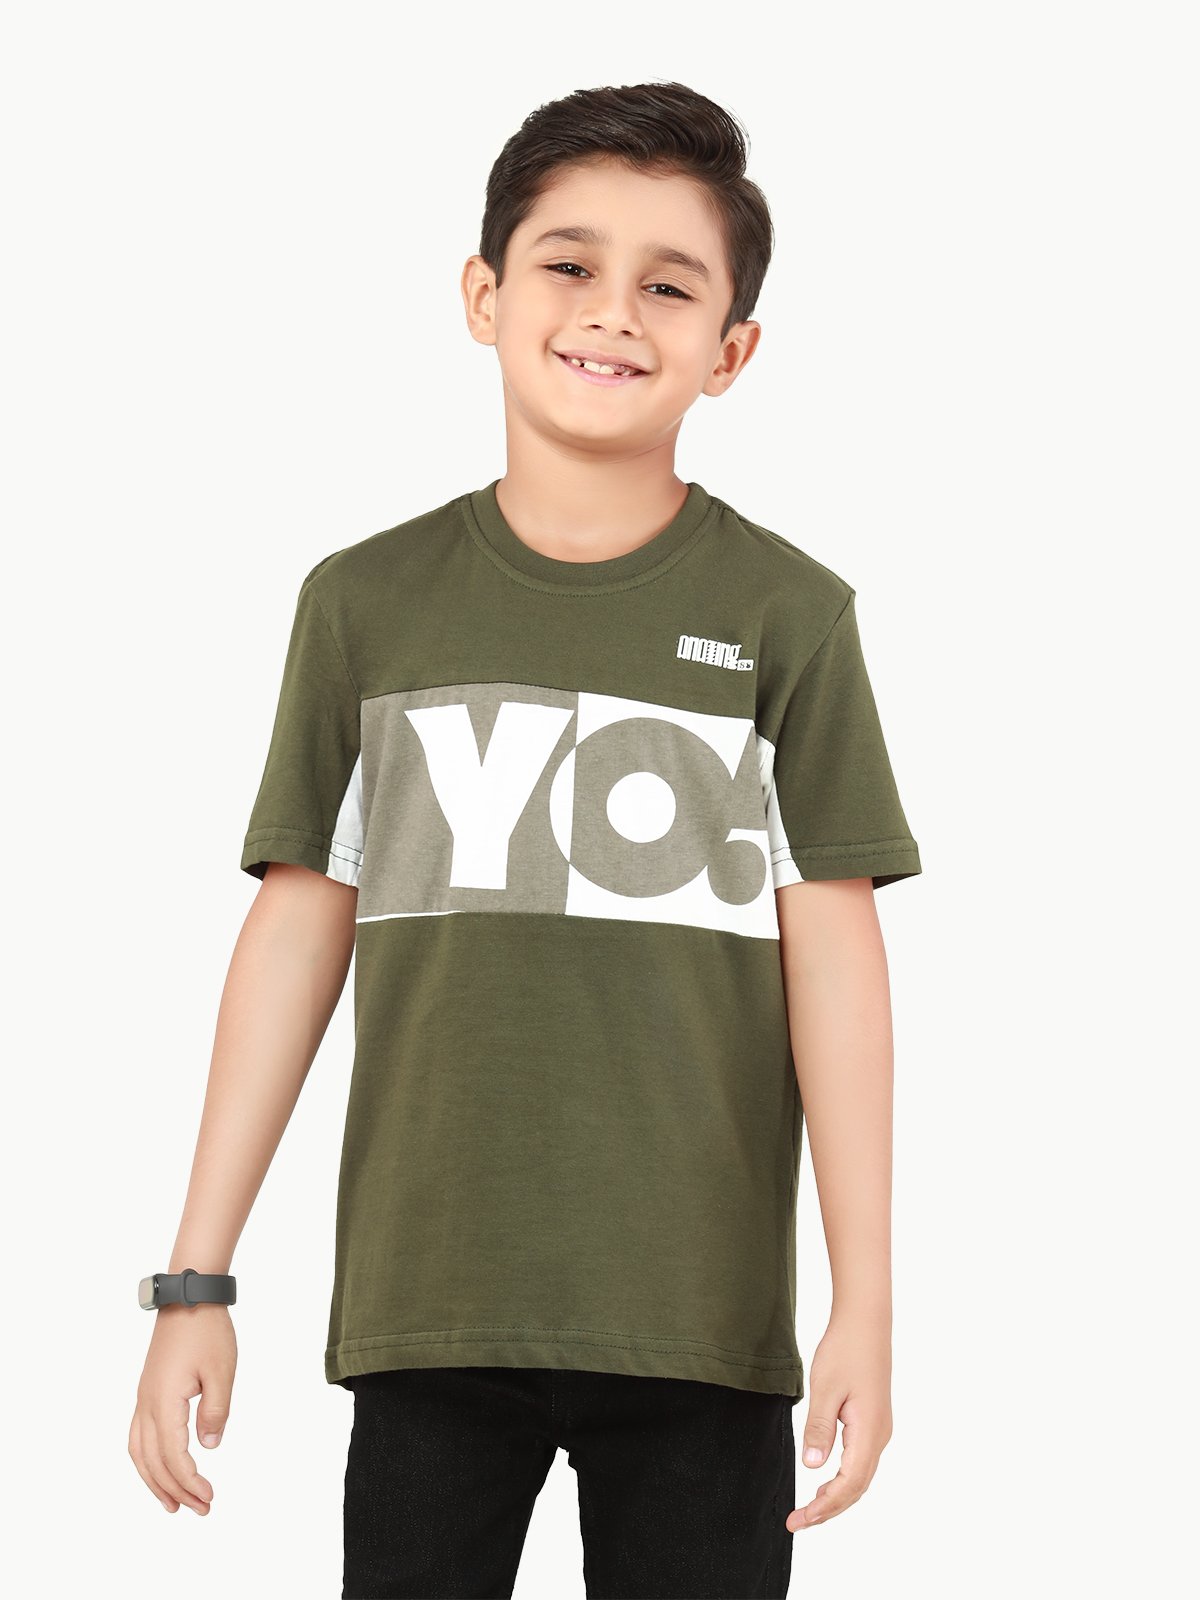 Boy's Olive Green T-Shirt - EBTTS22-011